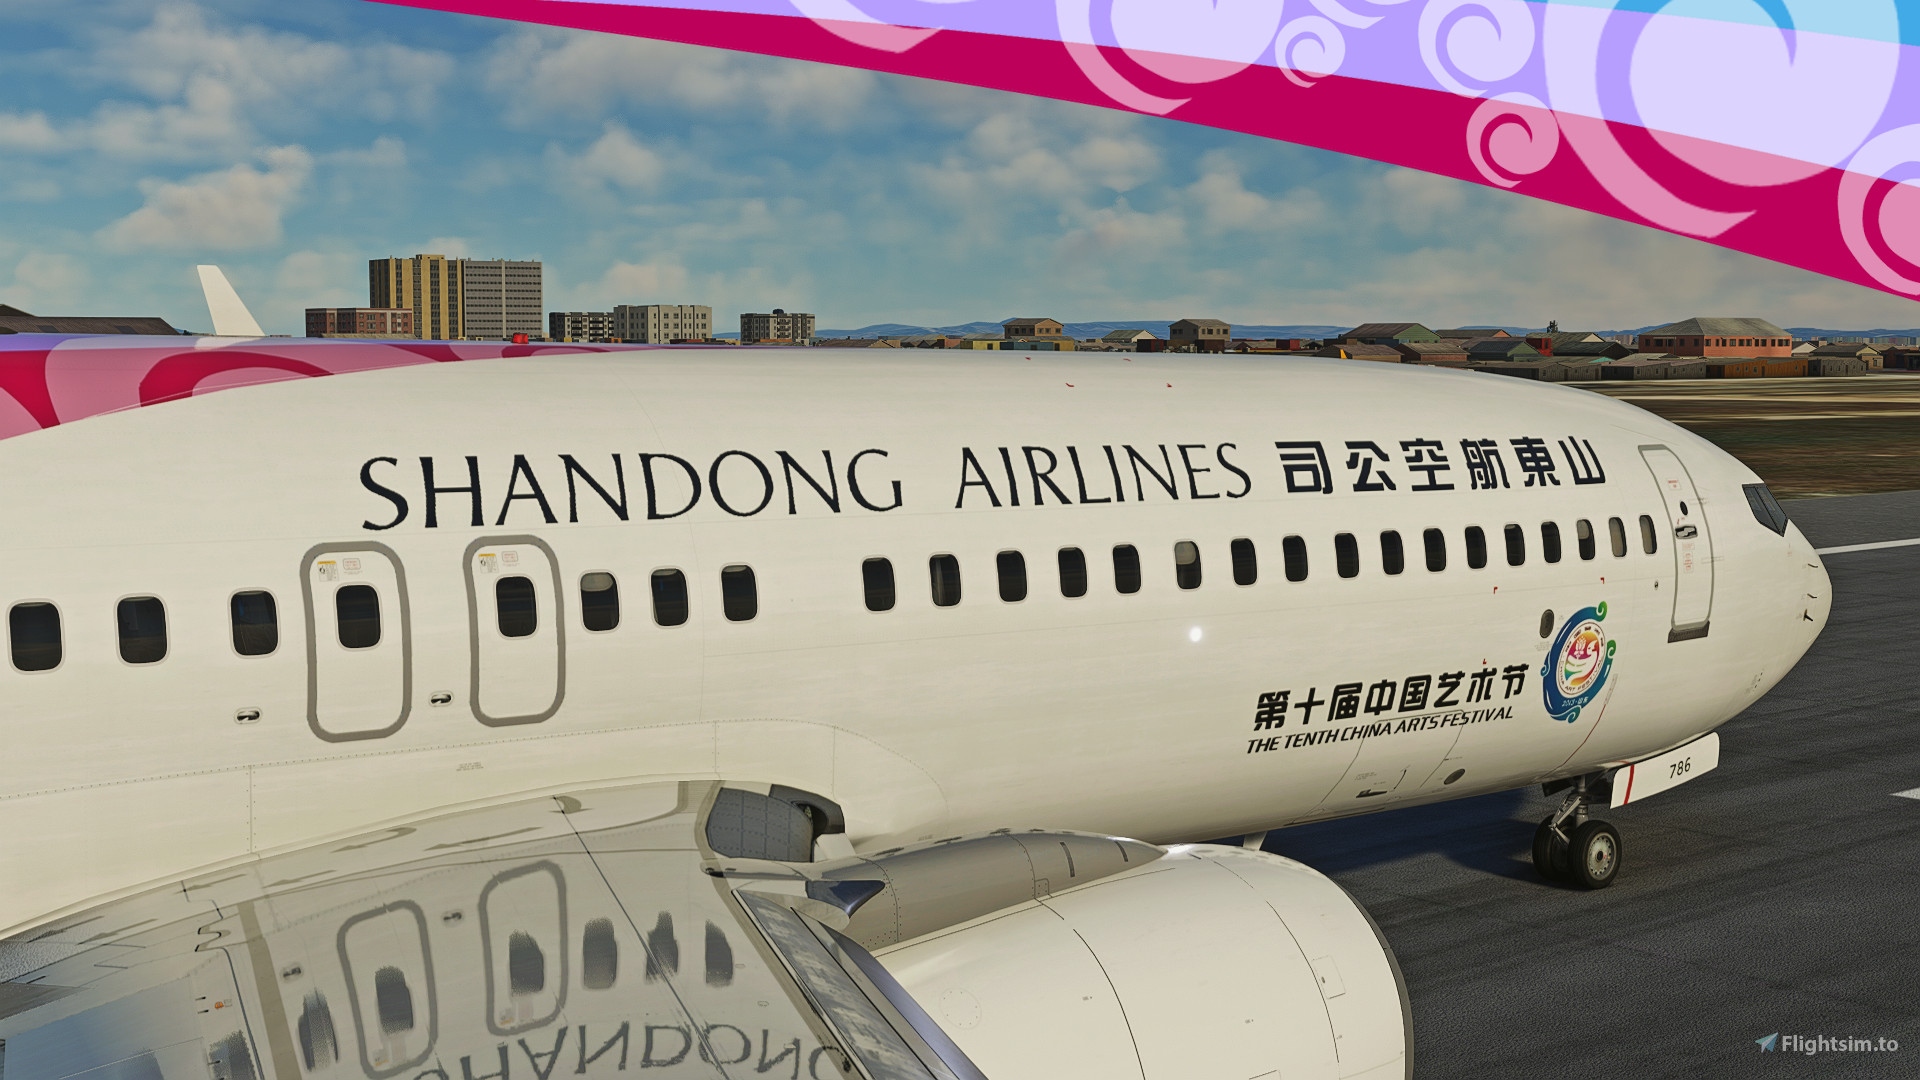 SPECIAL] PMDG 737-800 Shandong Airlines 山东航空公司B-5786 8K for 